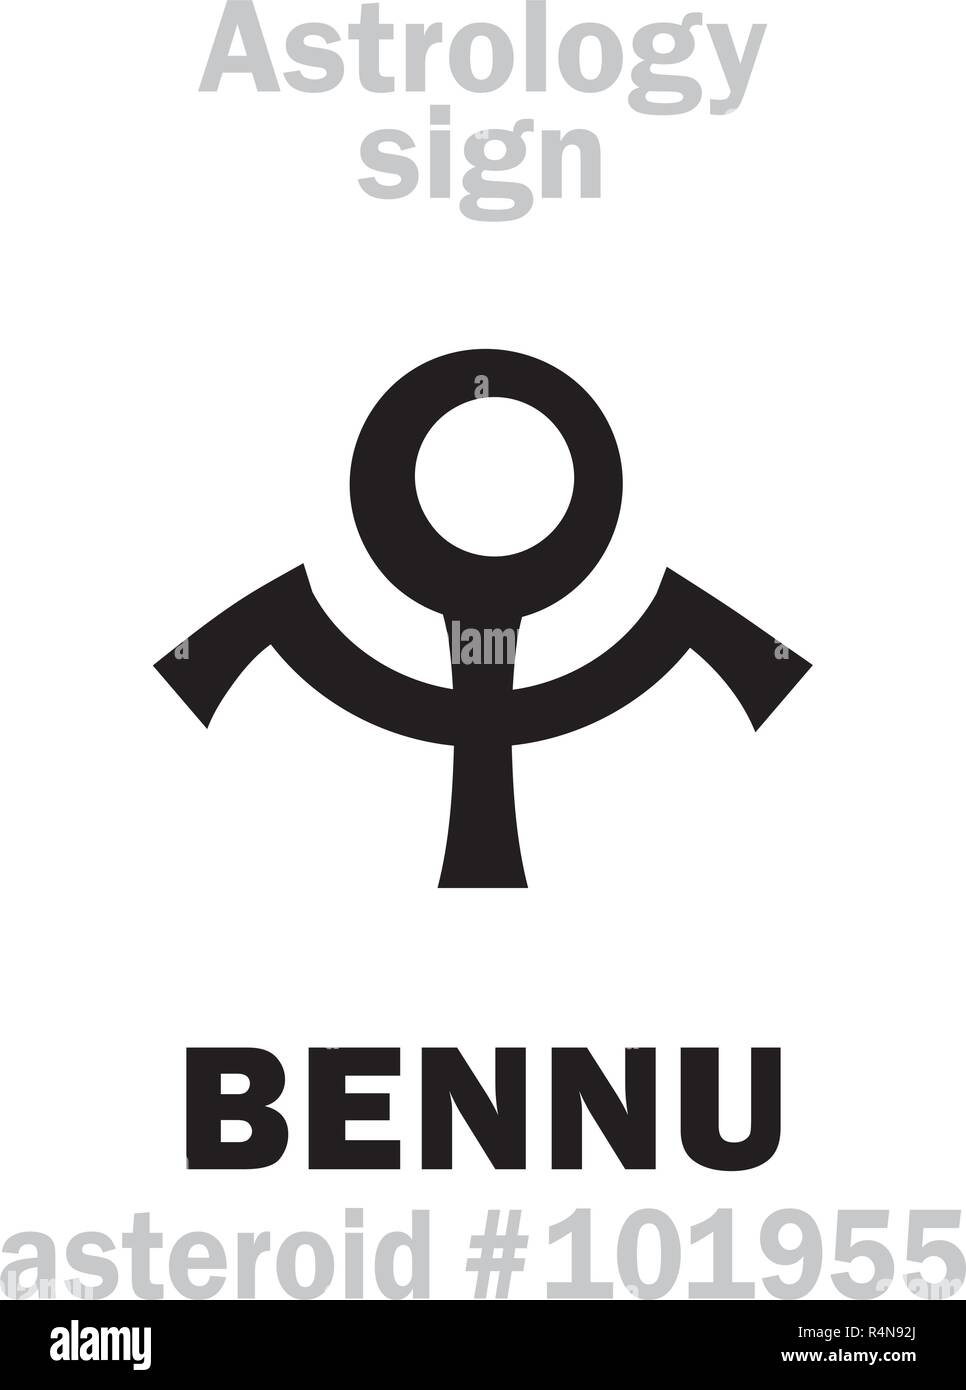 Astrology Alphabet: BENNU (Ba of Ra, The Egyptian Phonix), potentially hazardous asteroid #101955. Hieroglyphics character sign (single symbol). Stock Vector